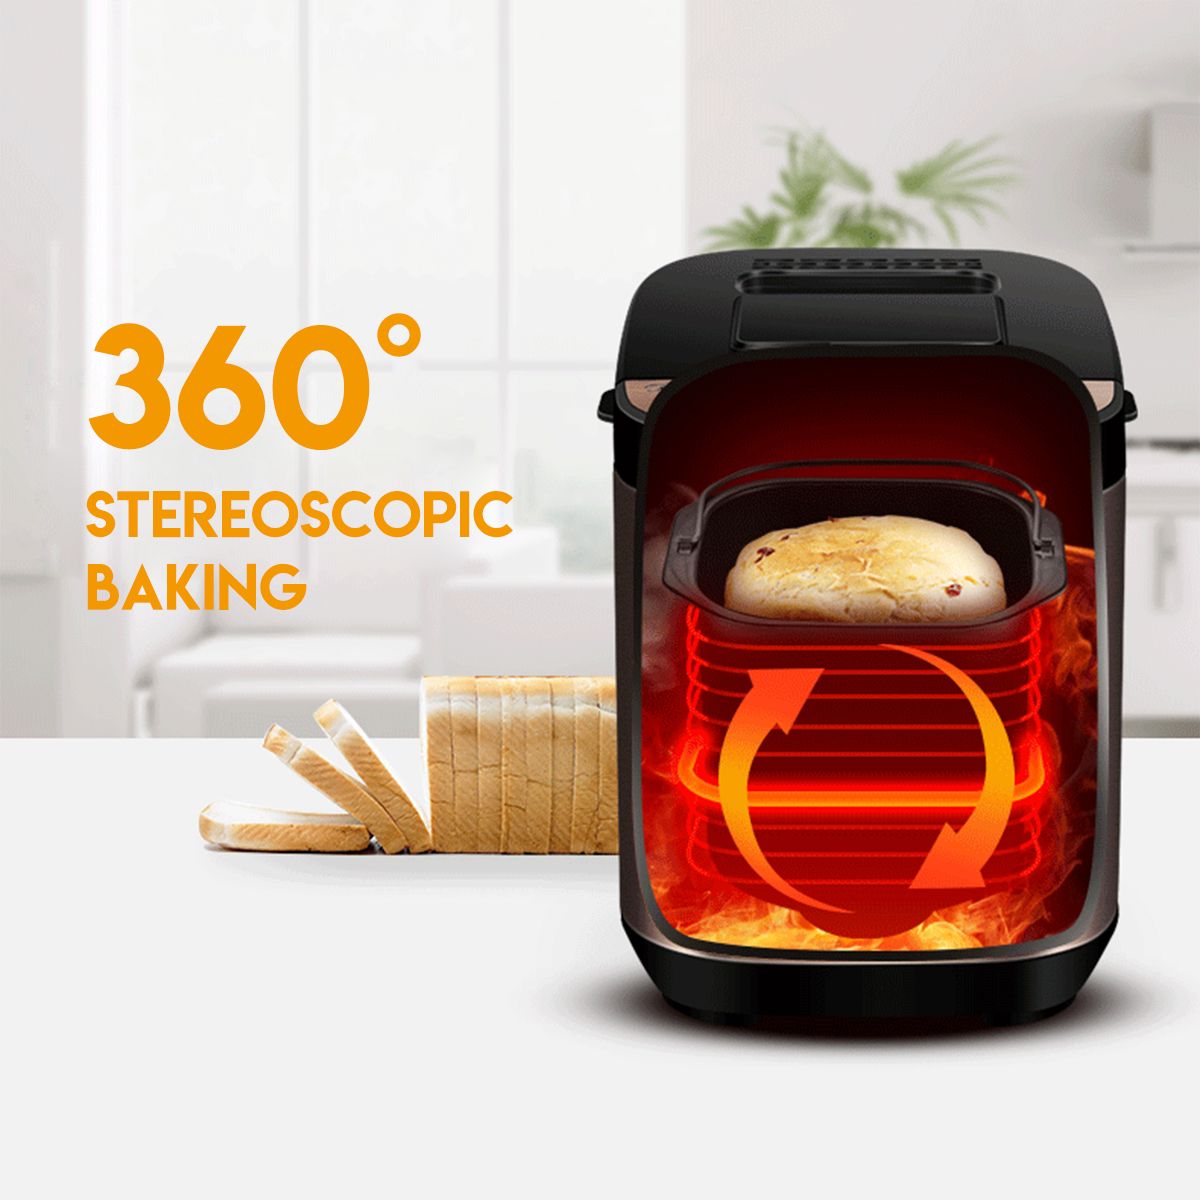 220V-580W--MM-ESC1510-Bread-Machine-Toasters-Breakfast-Maker-Home-Automatic-Multi-function-Intellige-1587032